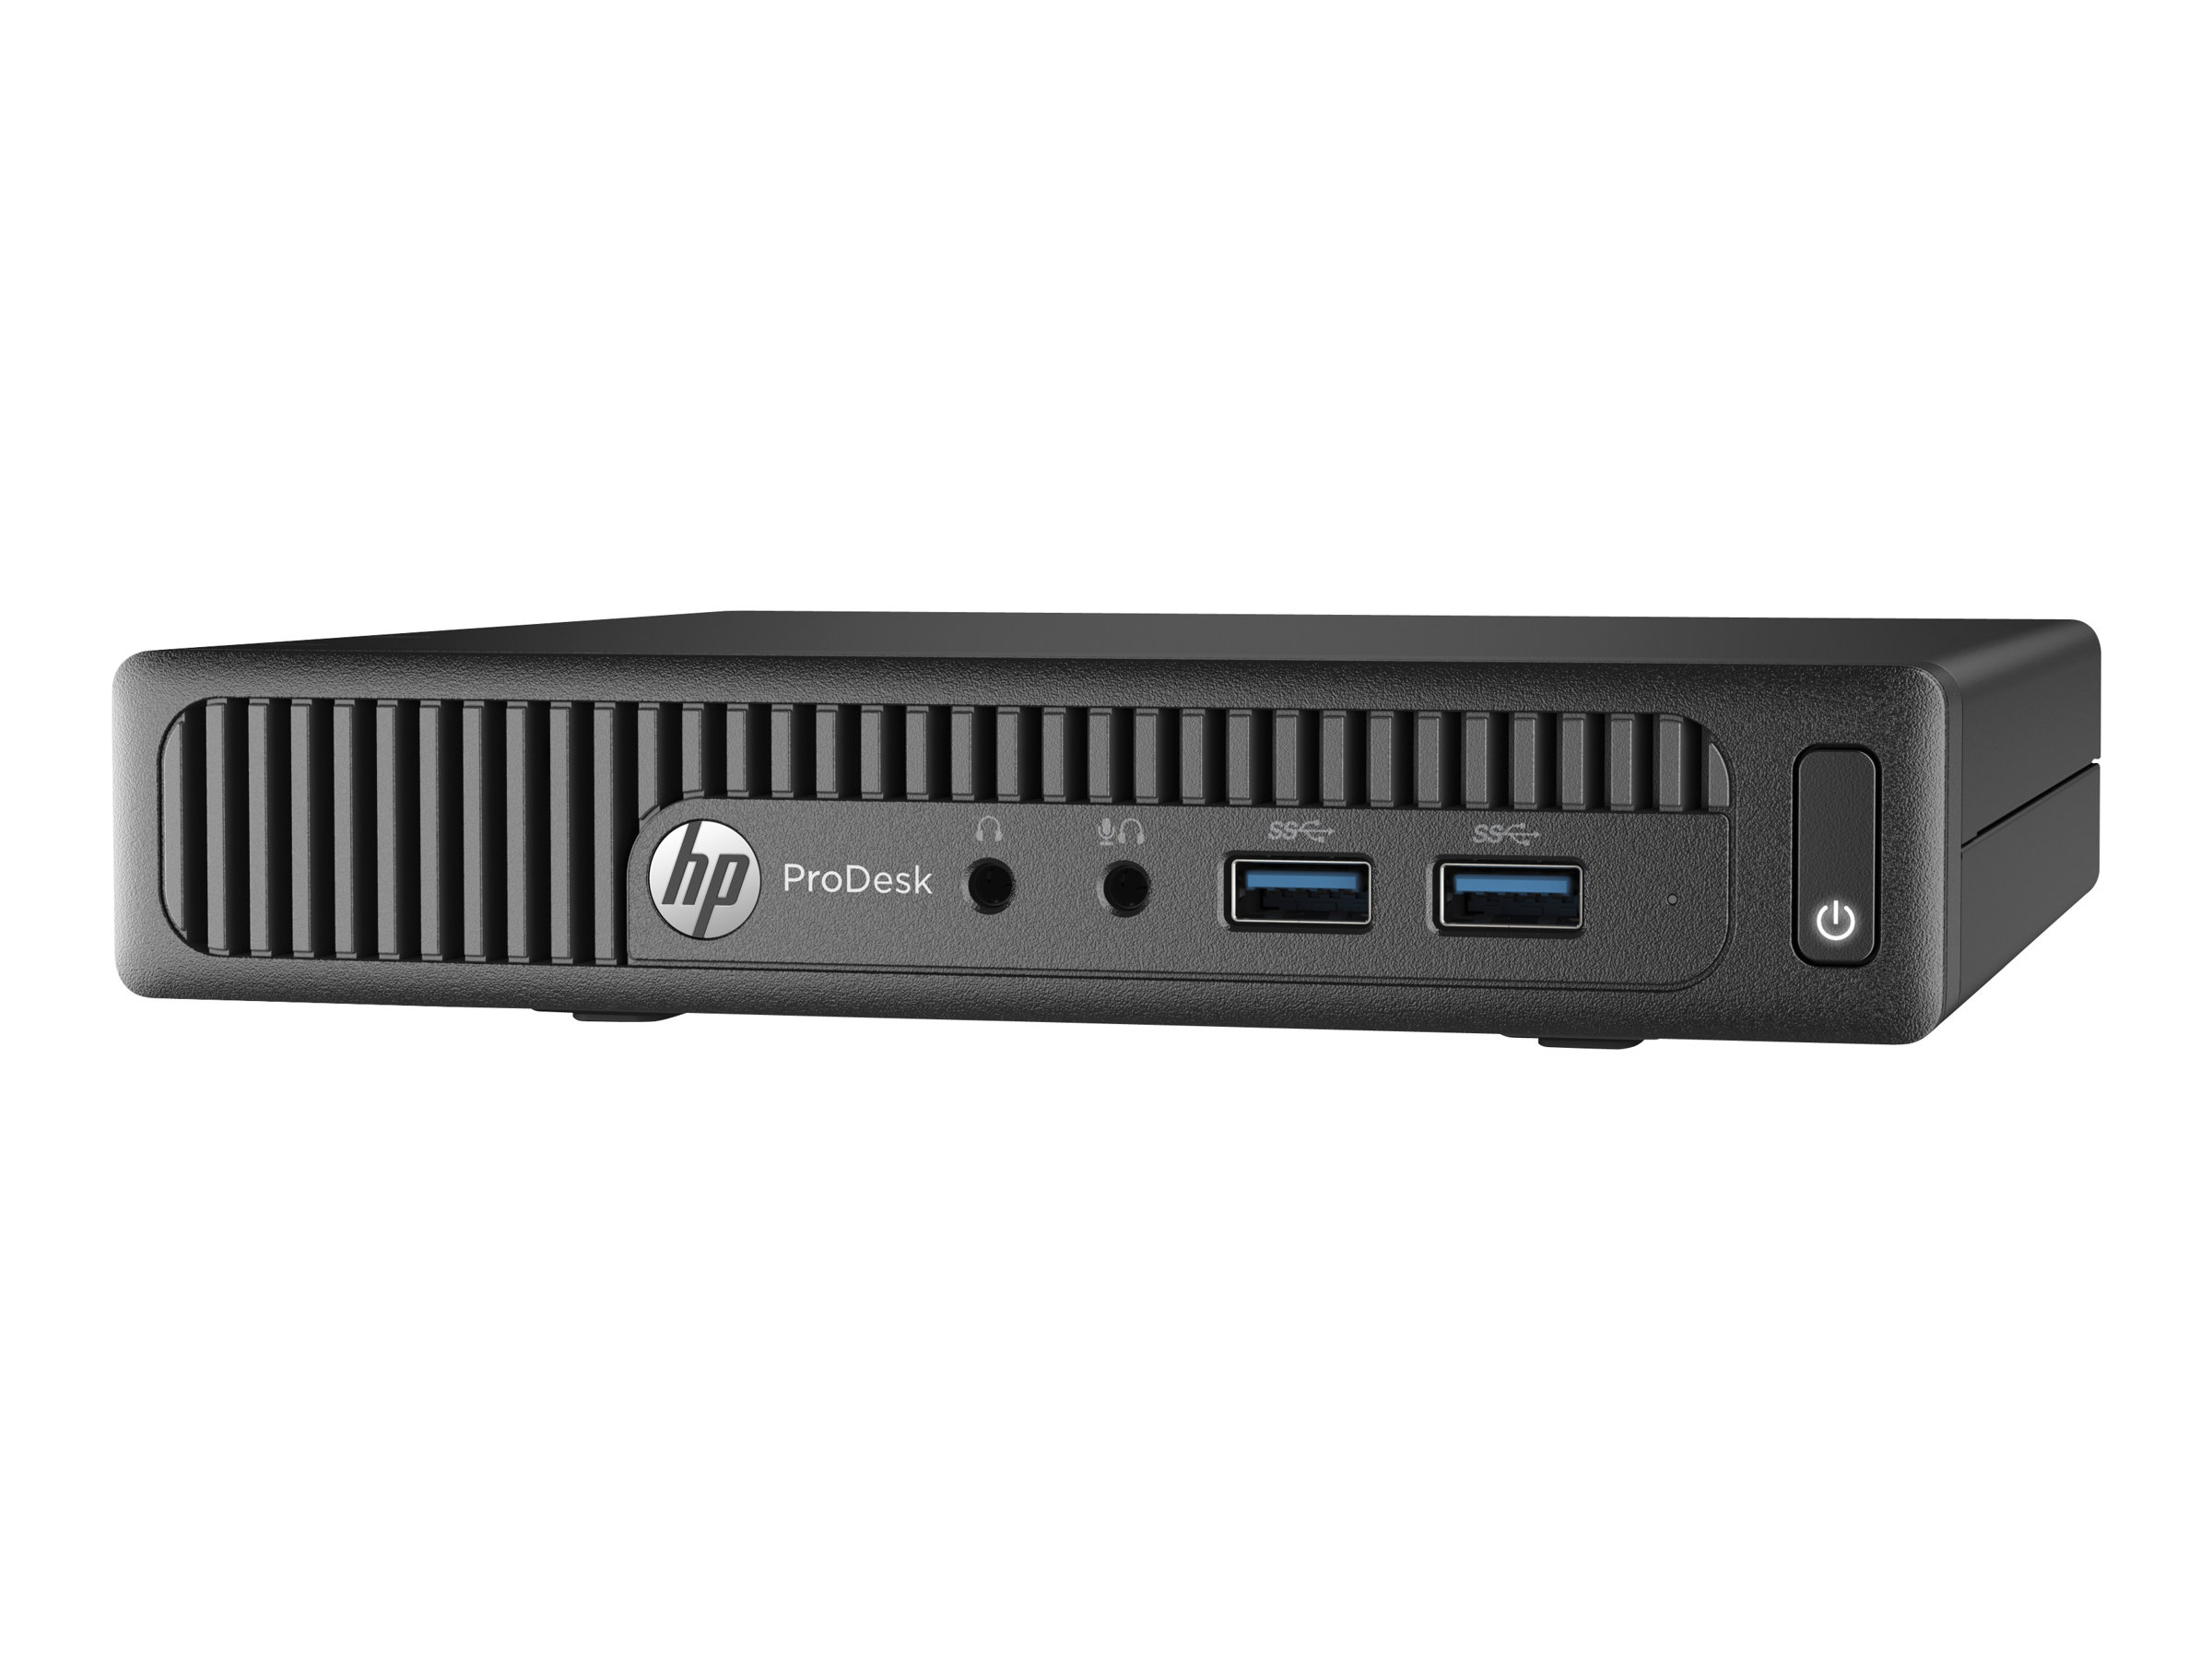 HP ProDesk 400 G2 - Mini desktop | www.shi.com